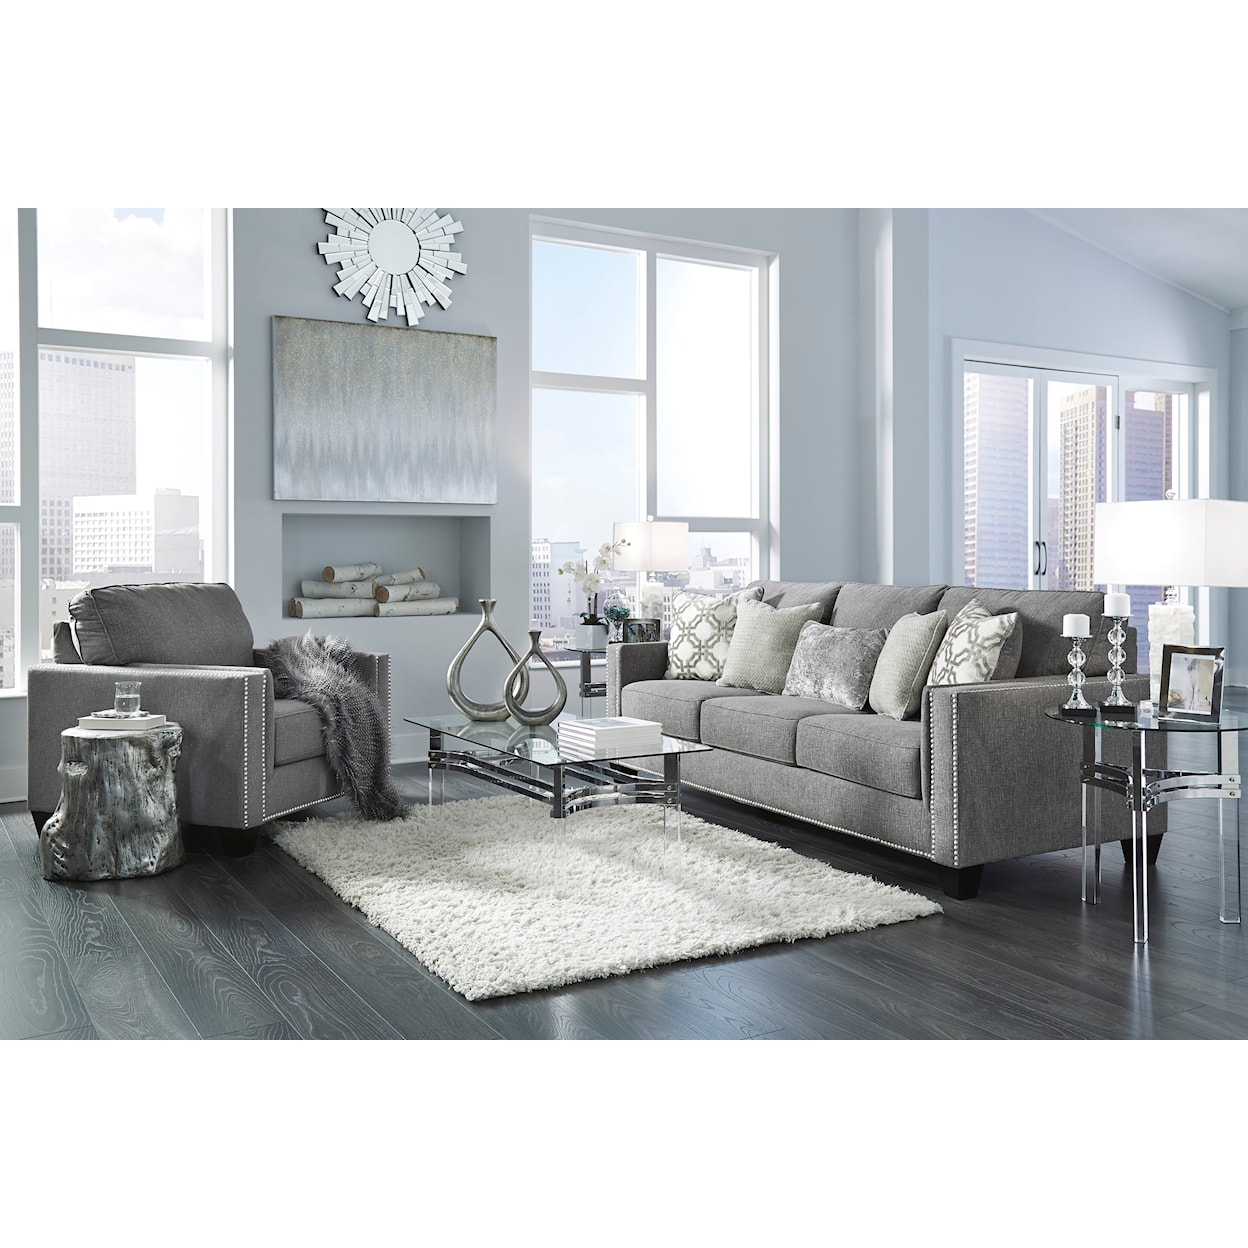 Ashley Furniture Signature Design Barrali 2-Piece Living Room Set